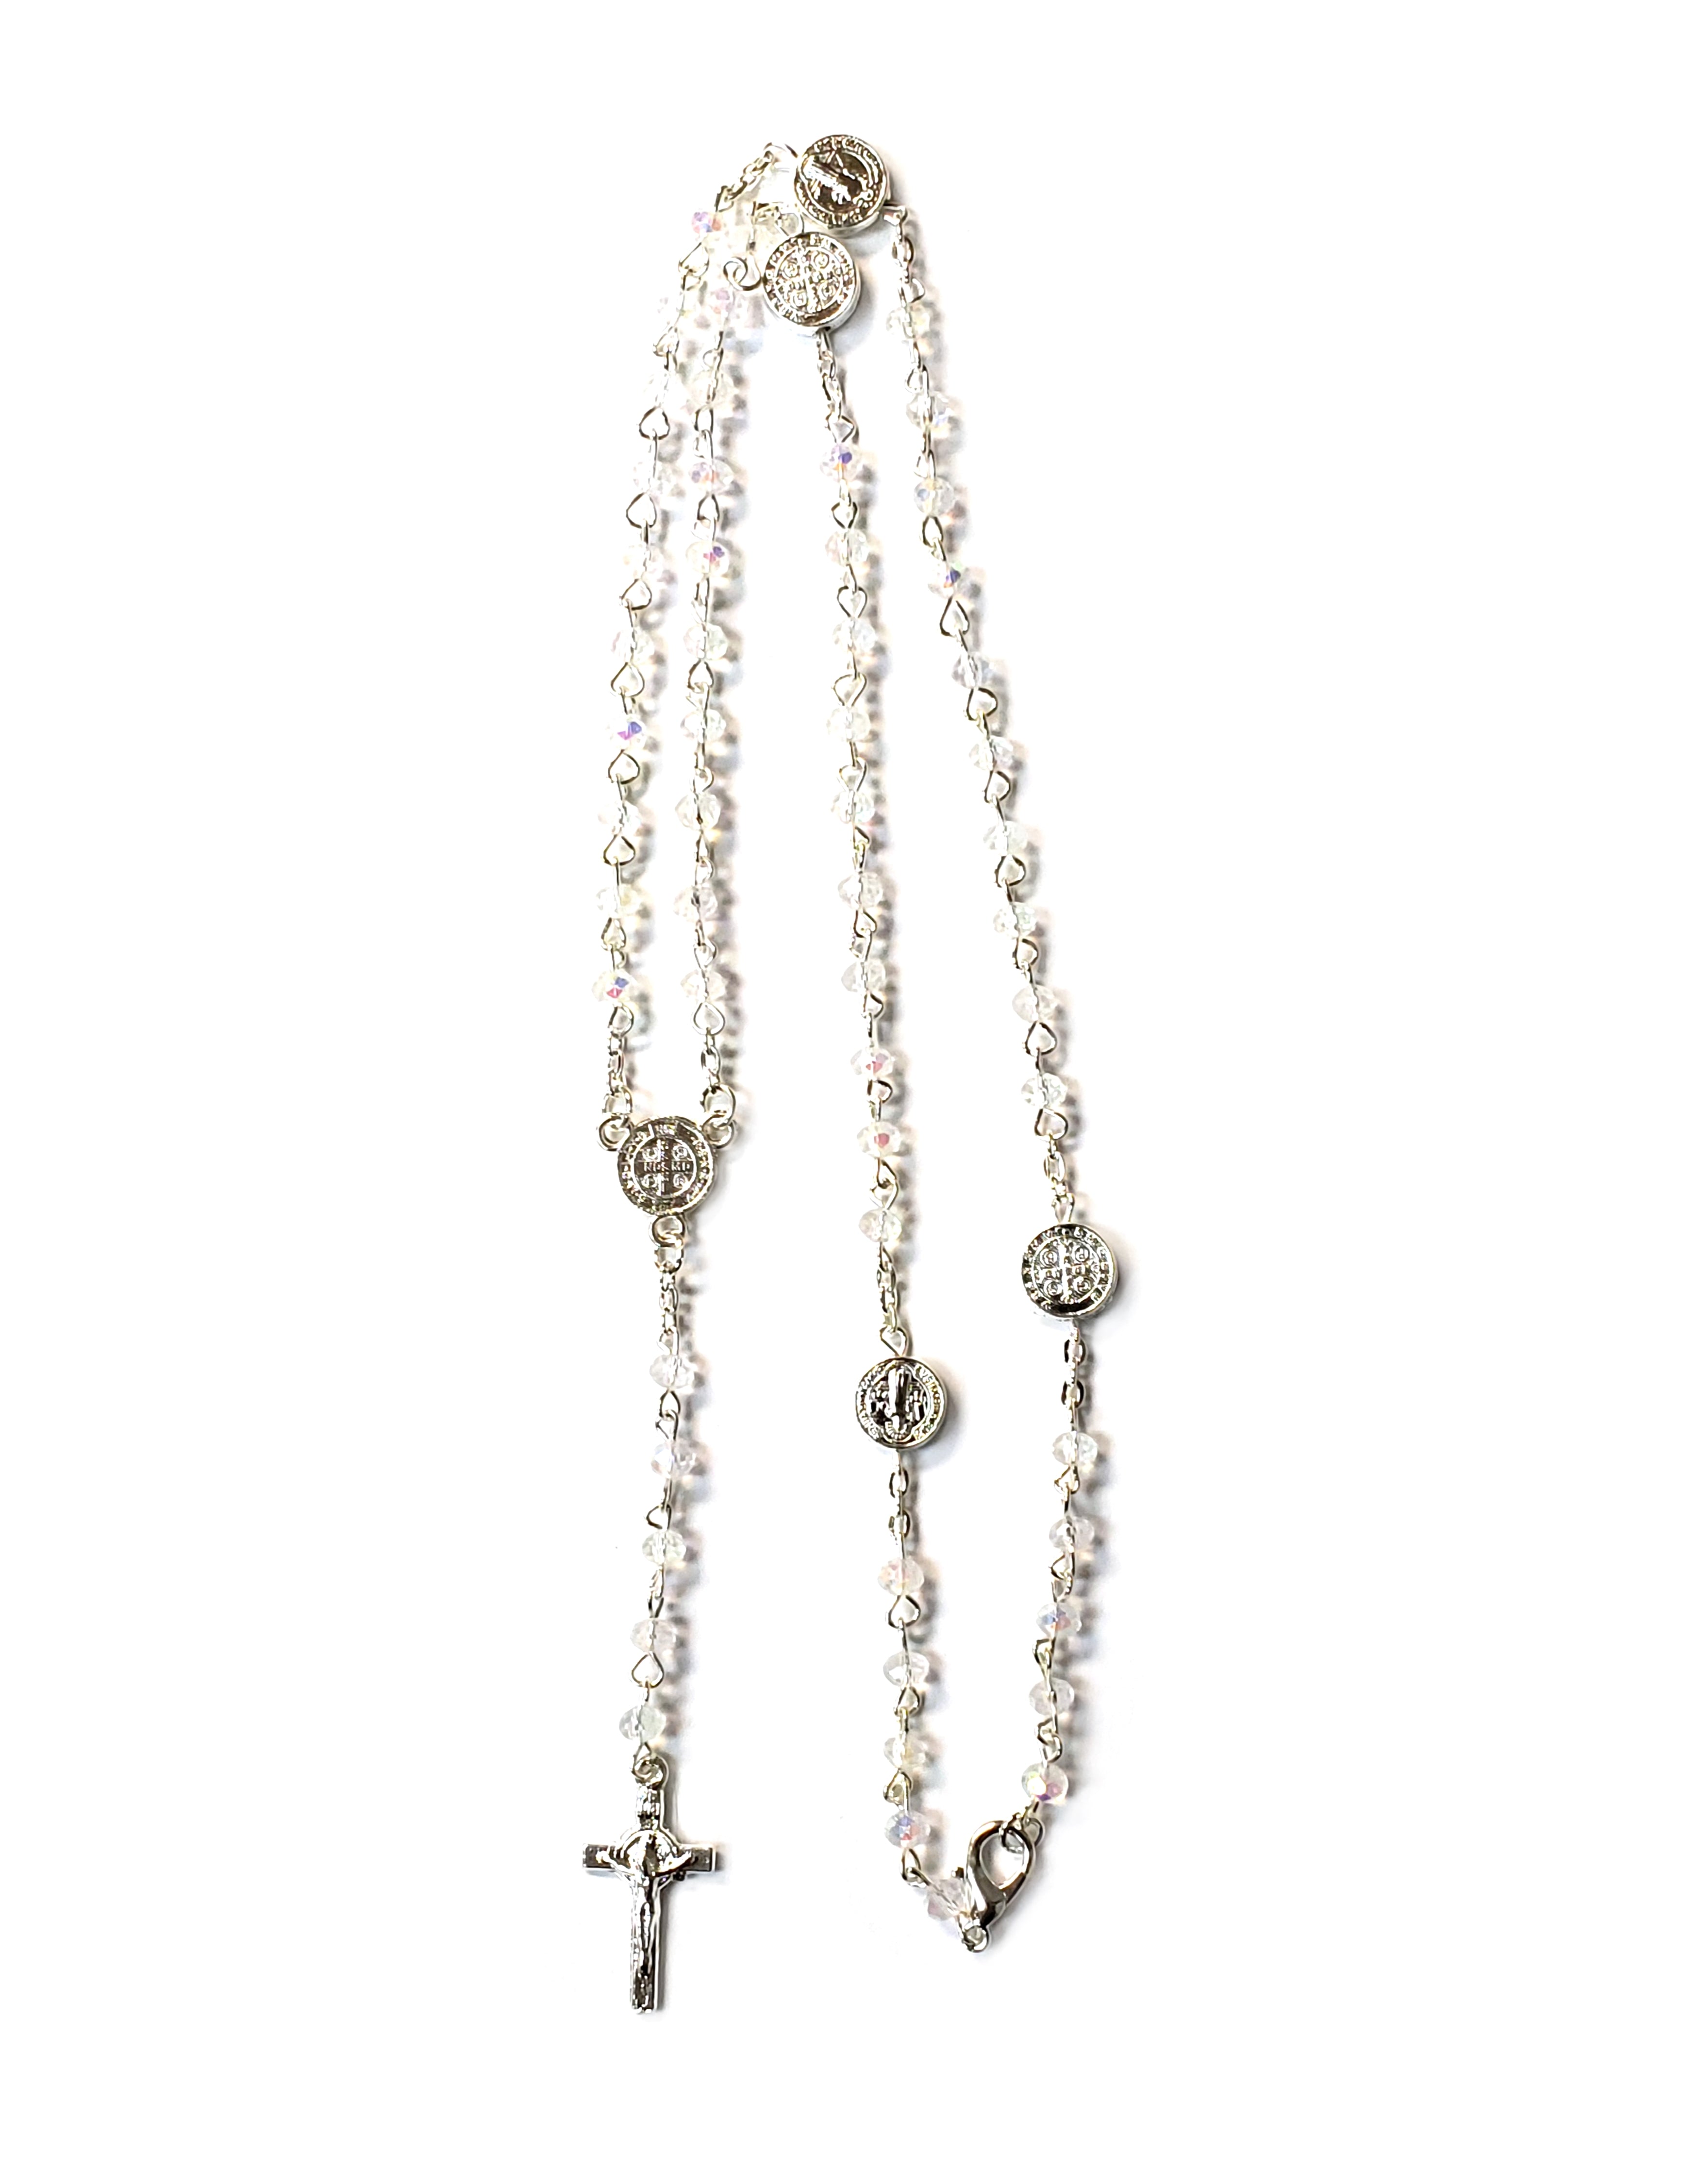 Tiny beads Saint Benedict rosary